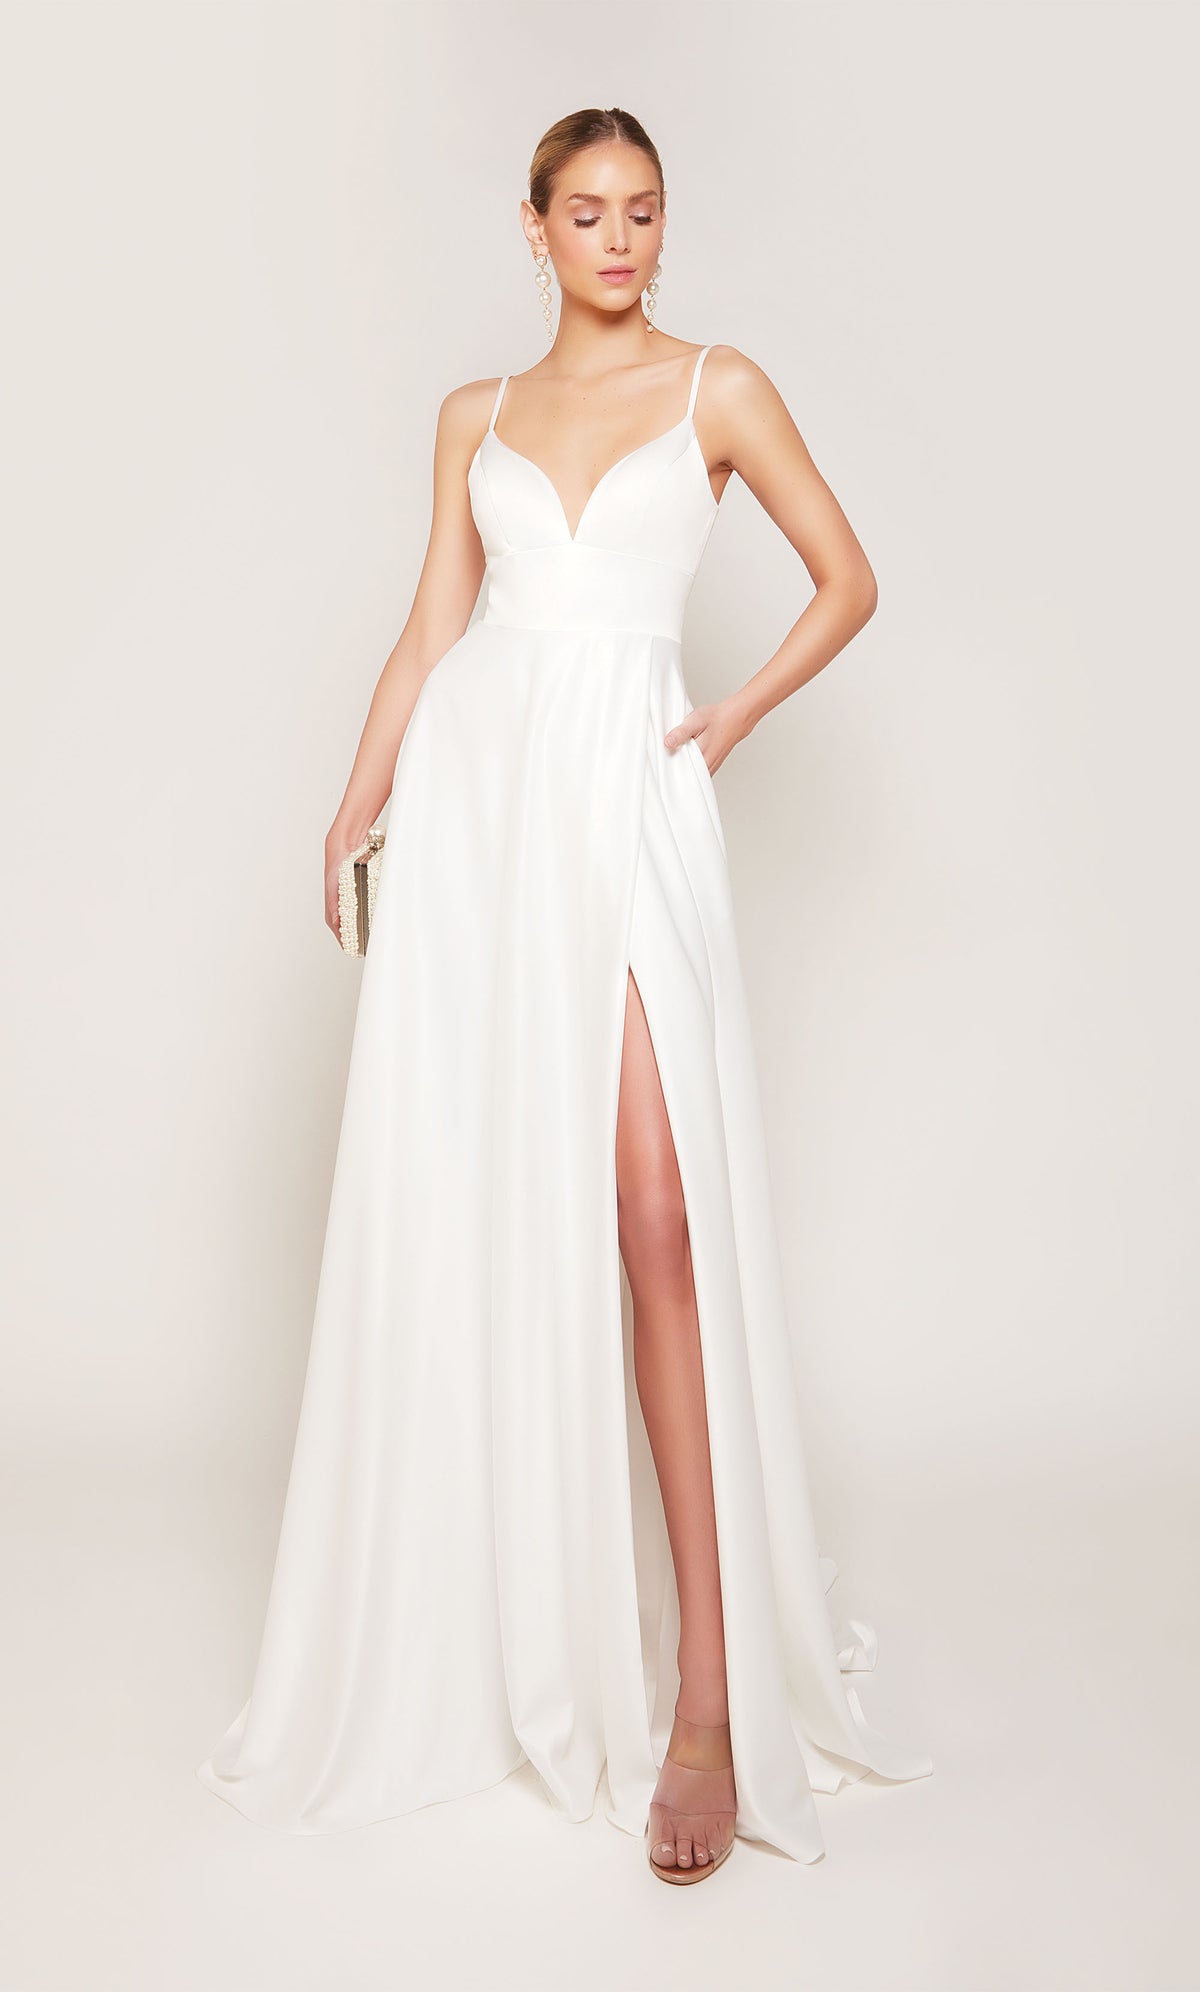 A simple, satin wedding dress with a V-neckline, side slit, and pockets. 